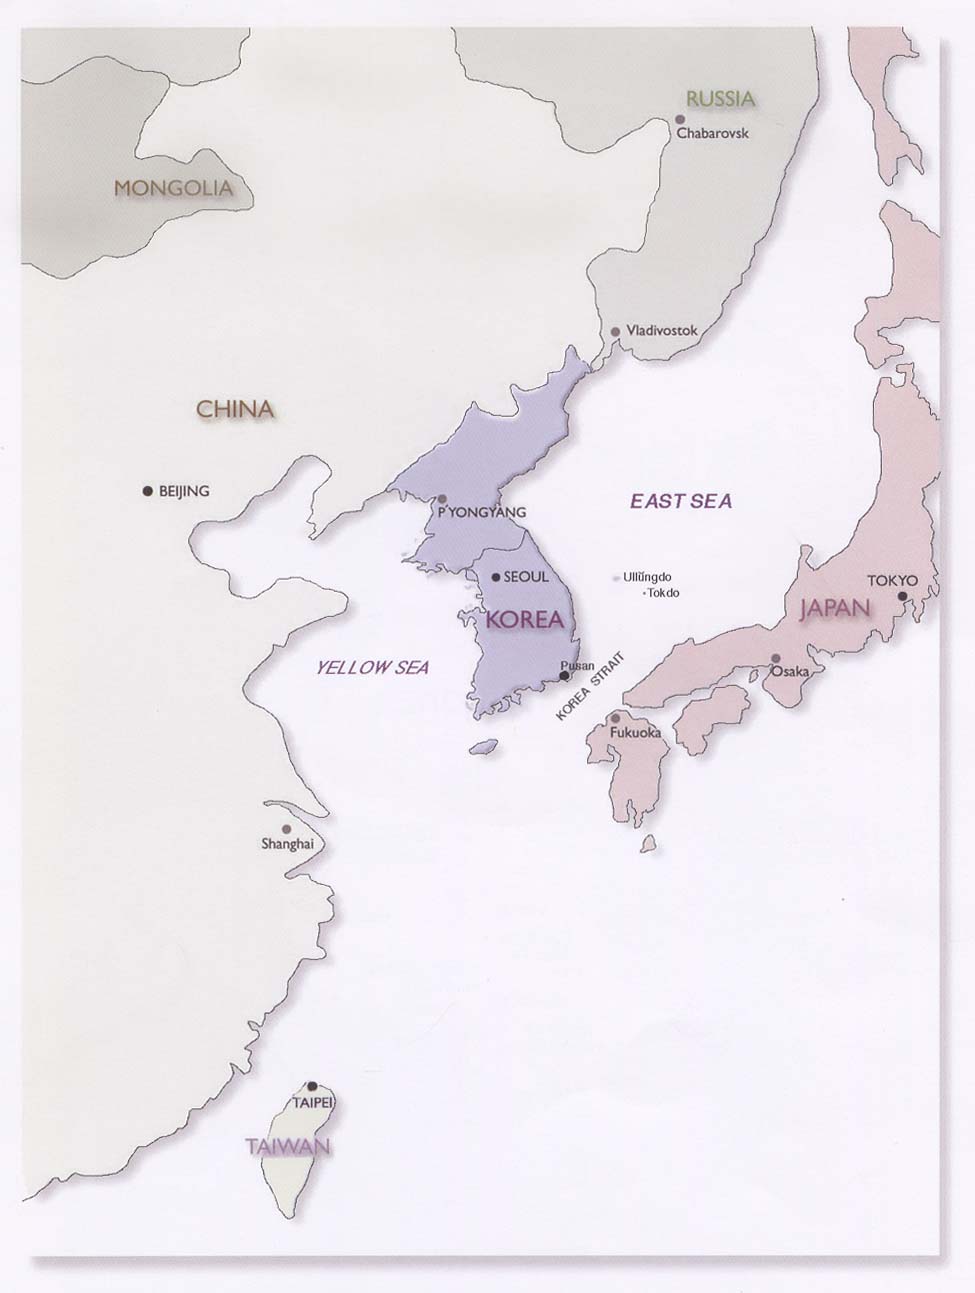 A map of Korea